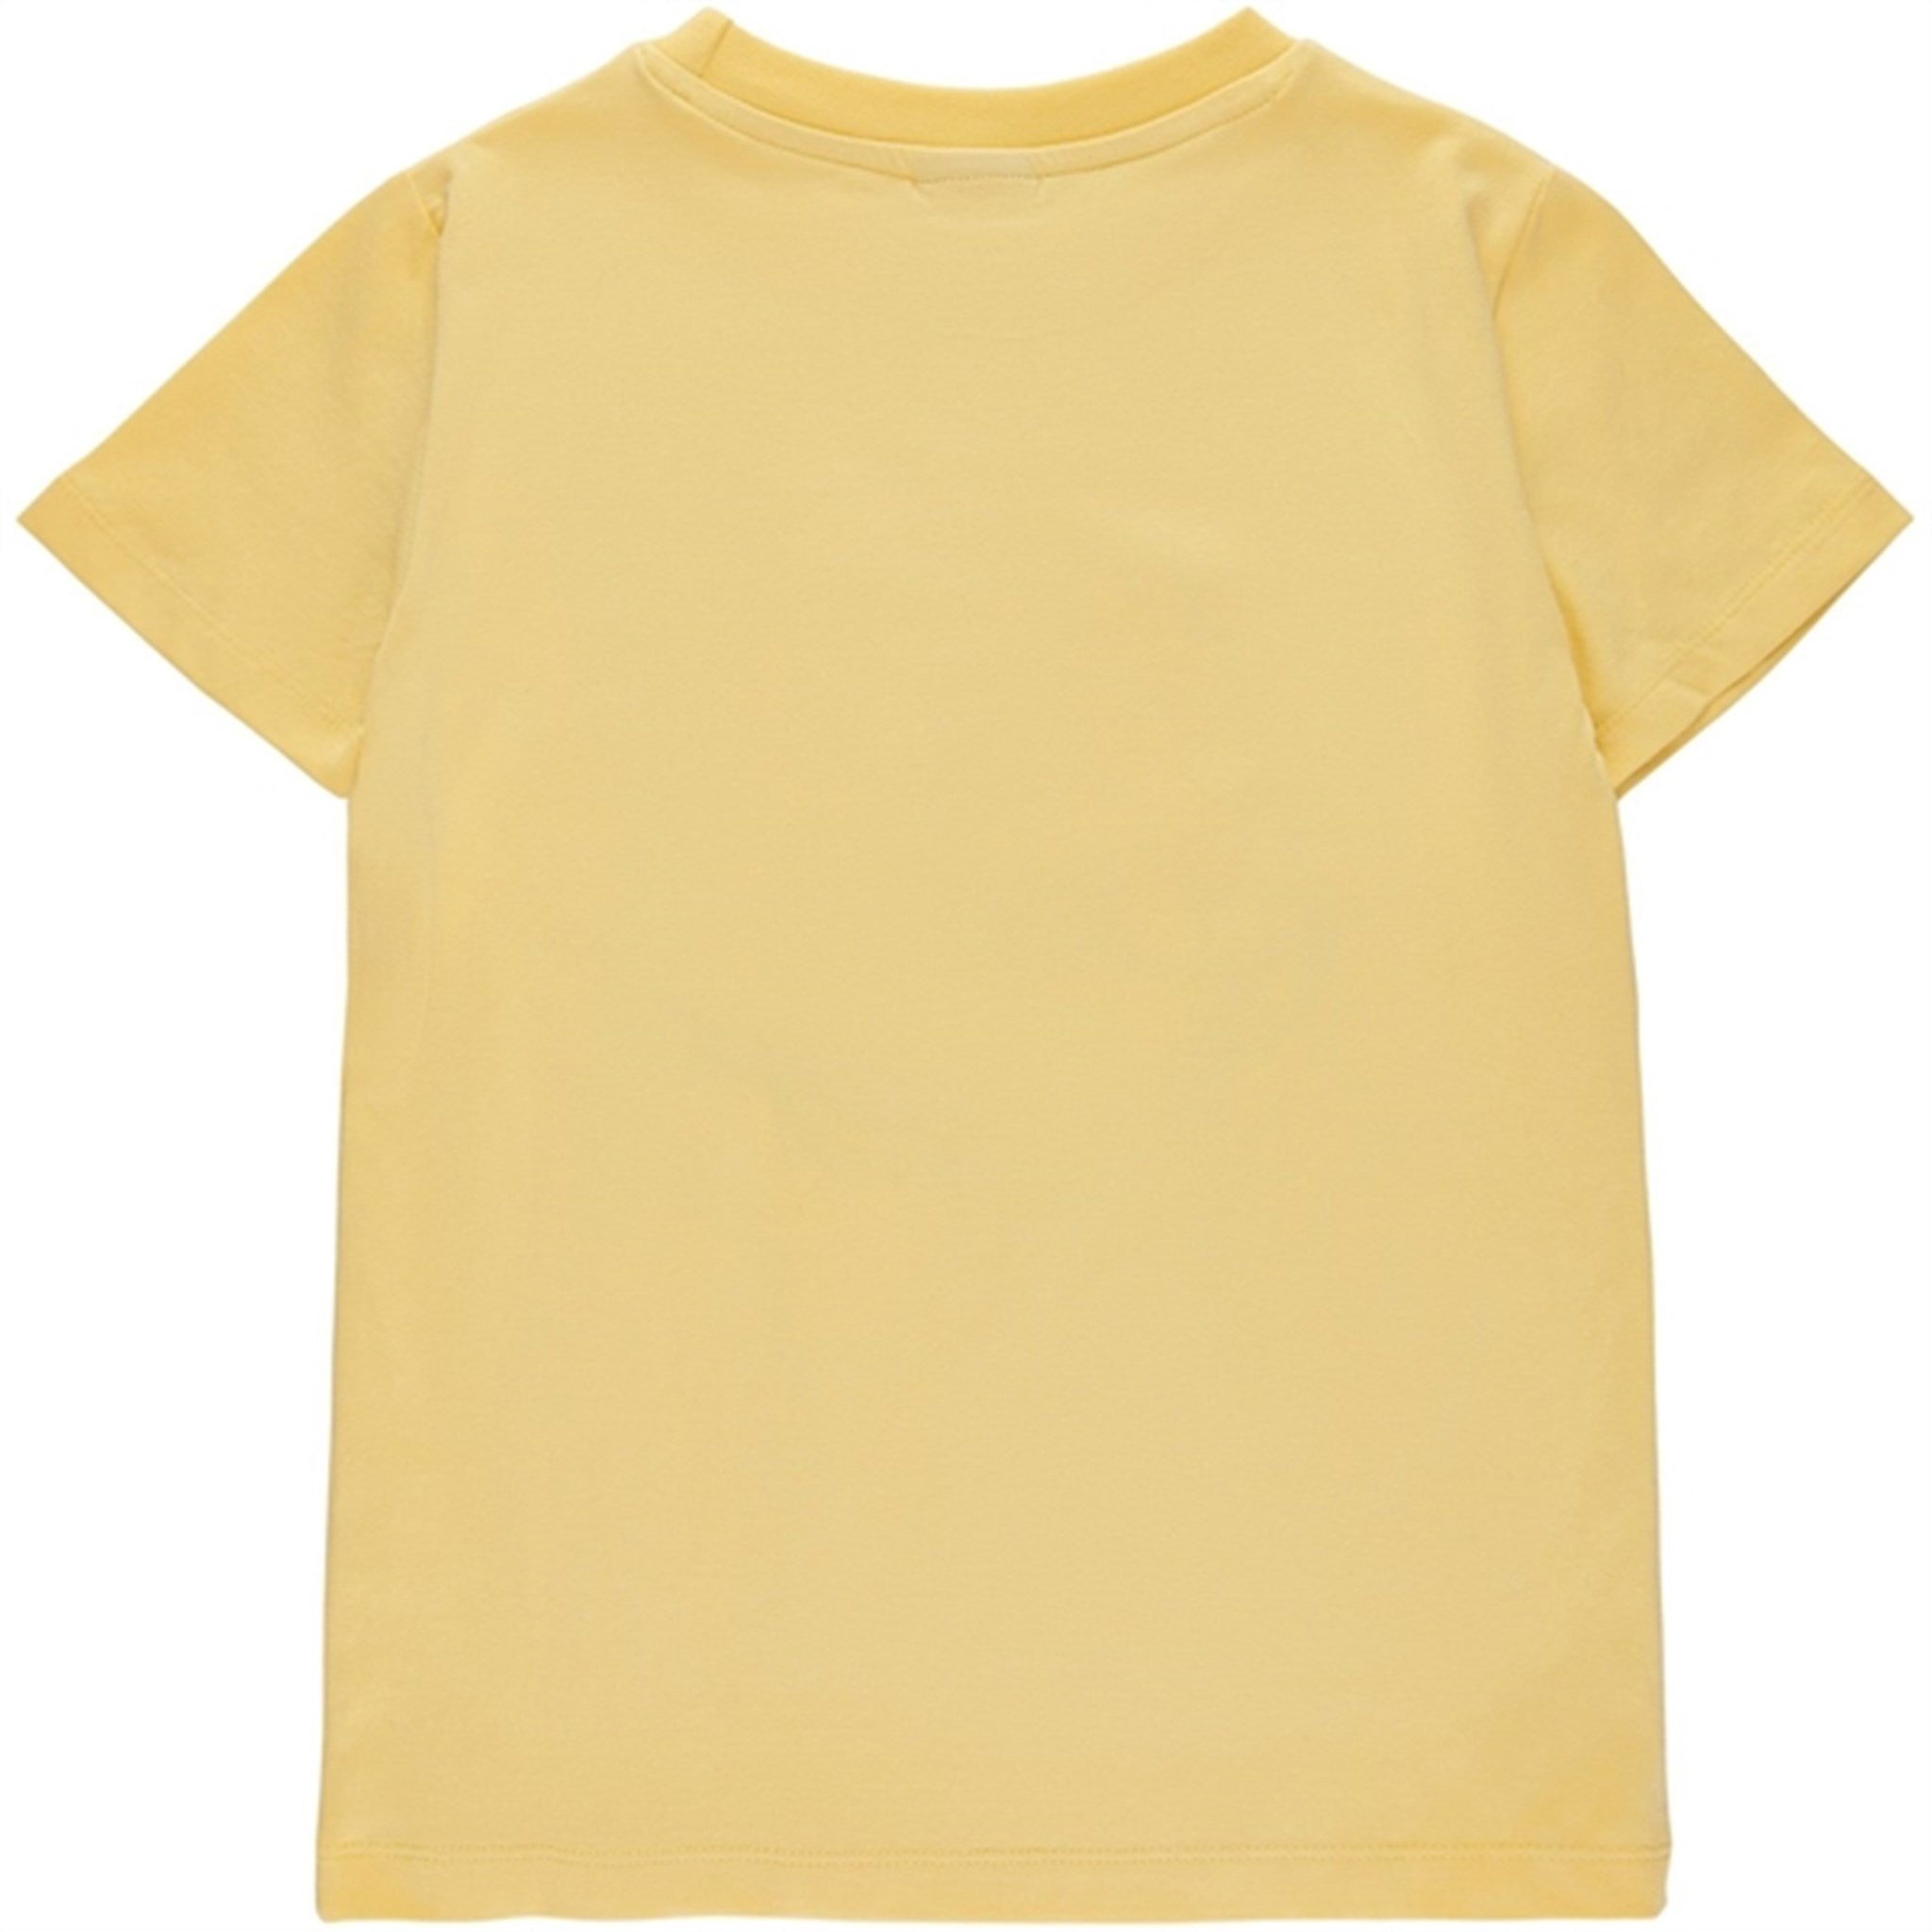 THE NEW Sunlight Chupa Chups T-shirt 2